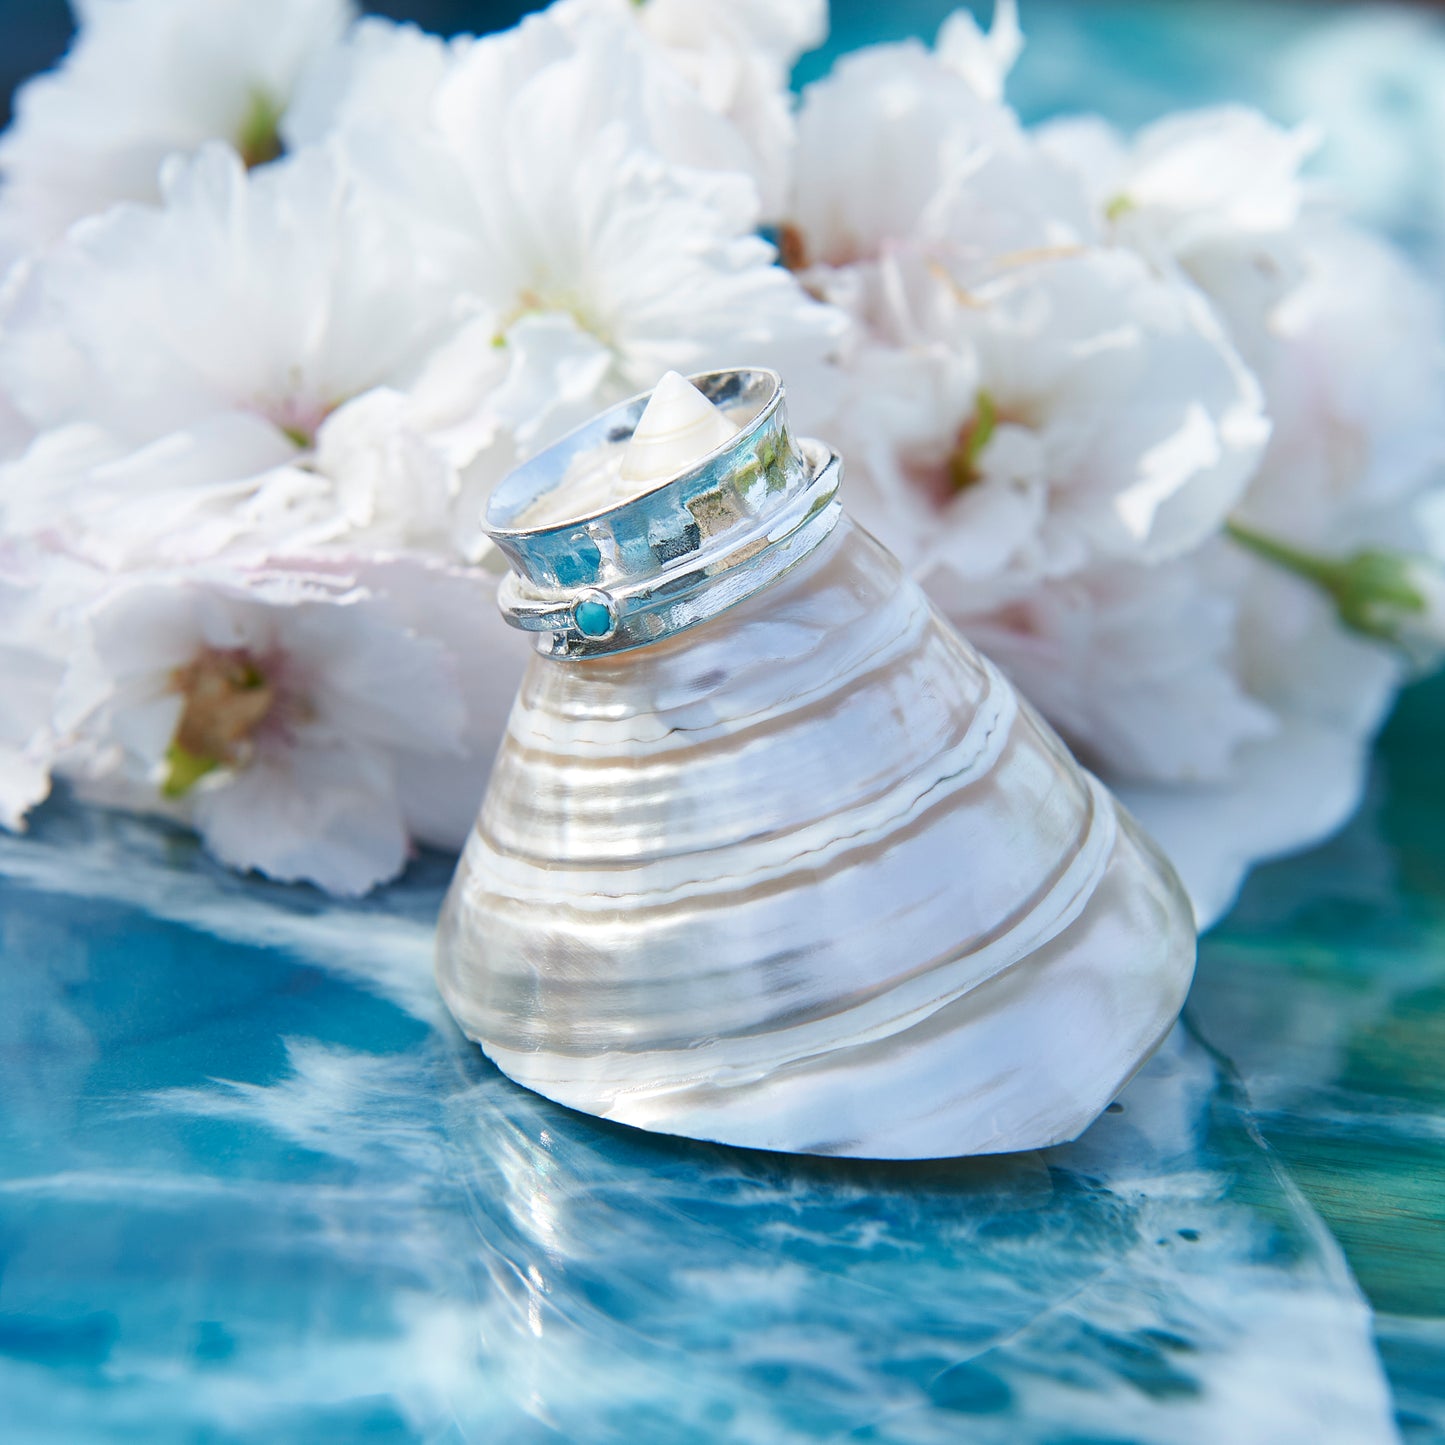 Turquoise  Spinner Ring - Love Beach Beads